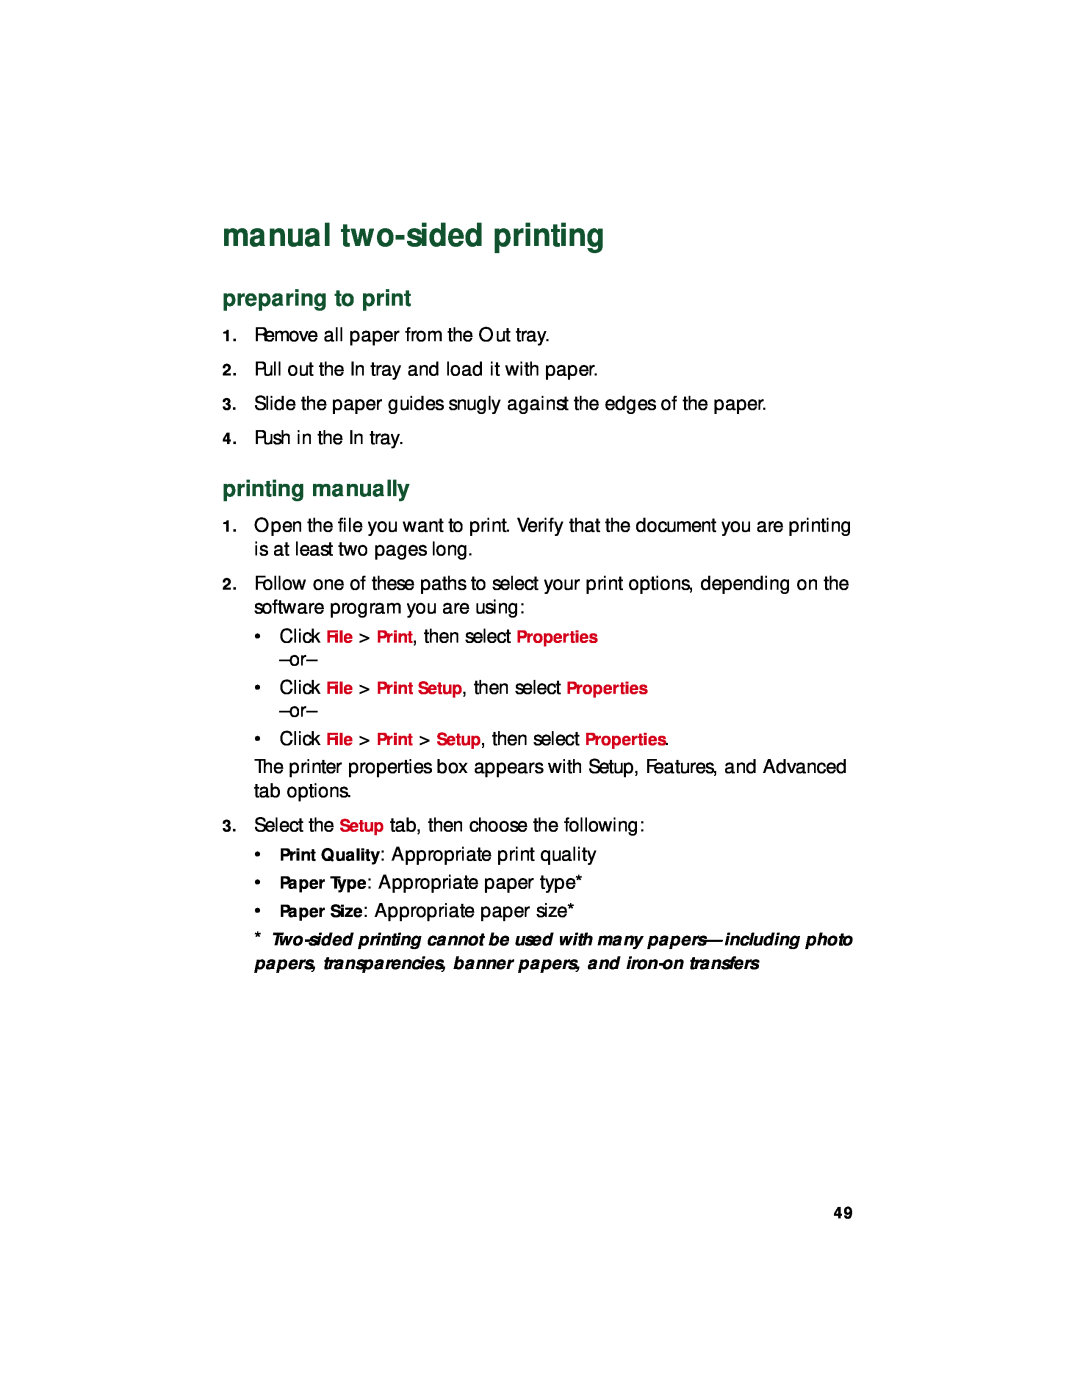 HP 920c, 948c, 940c manual two-sided printing, printing manually, preparing to print 